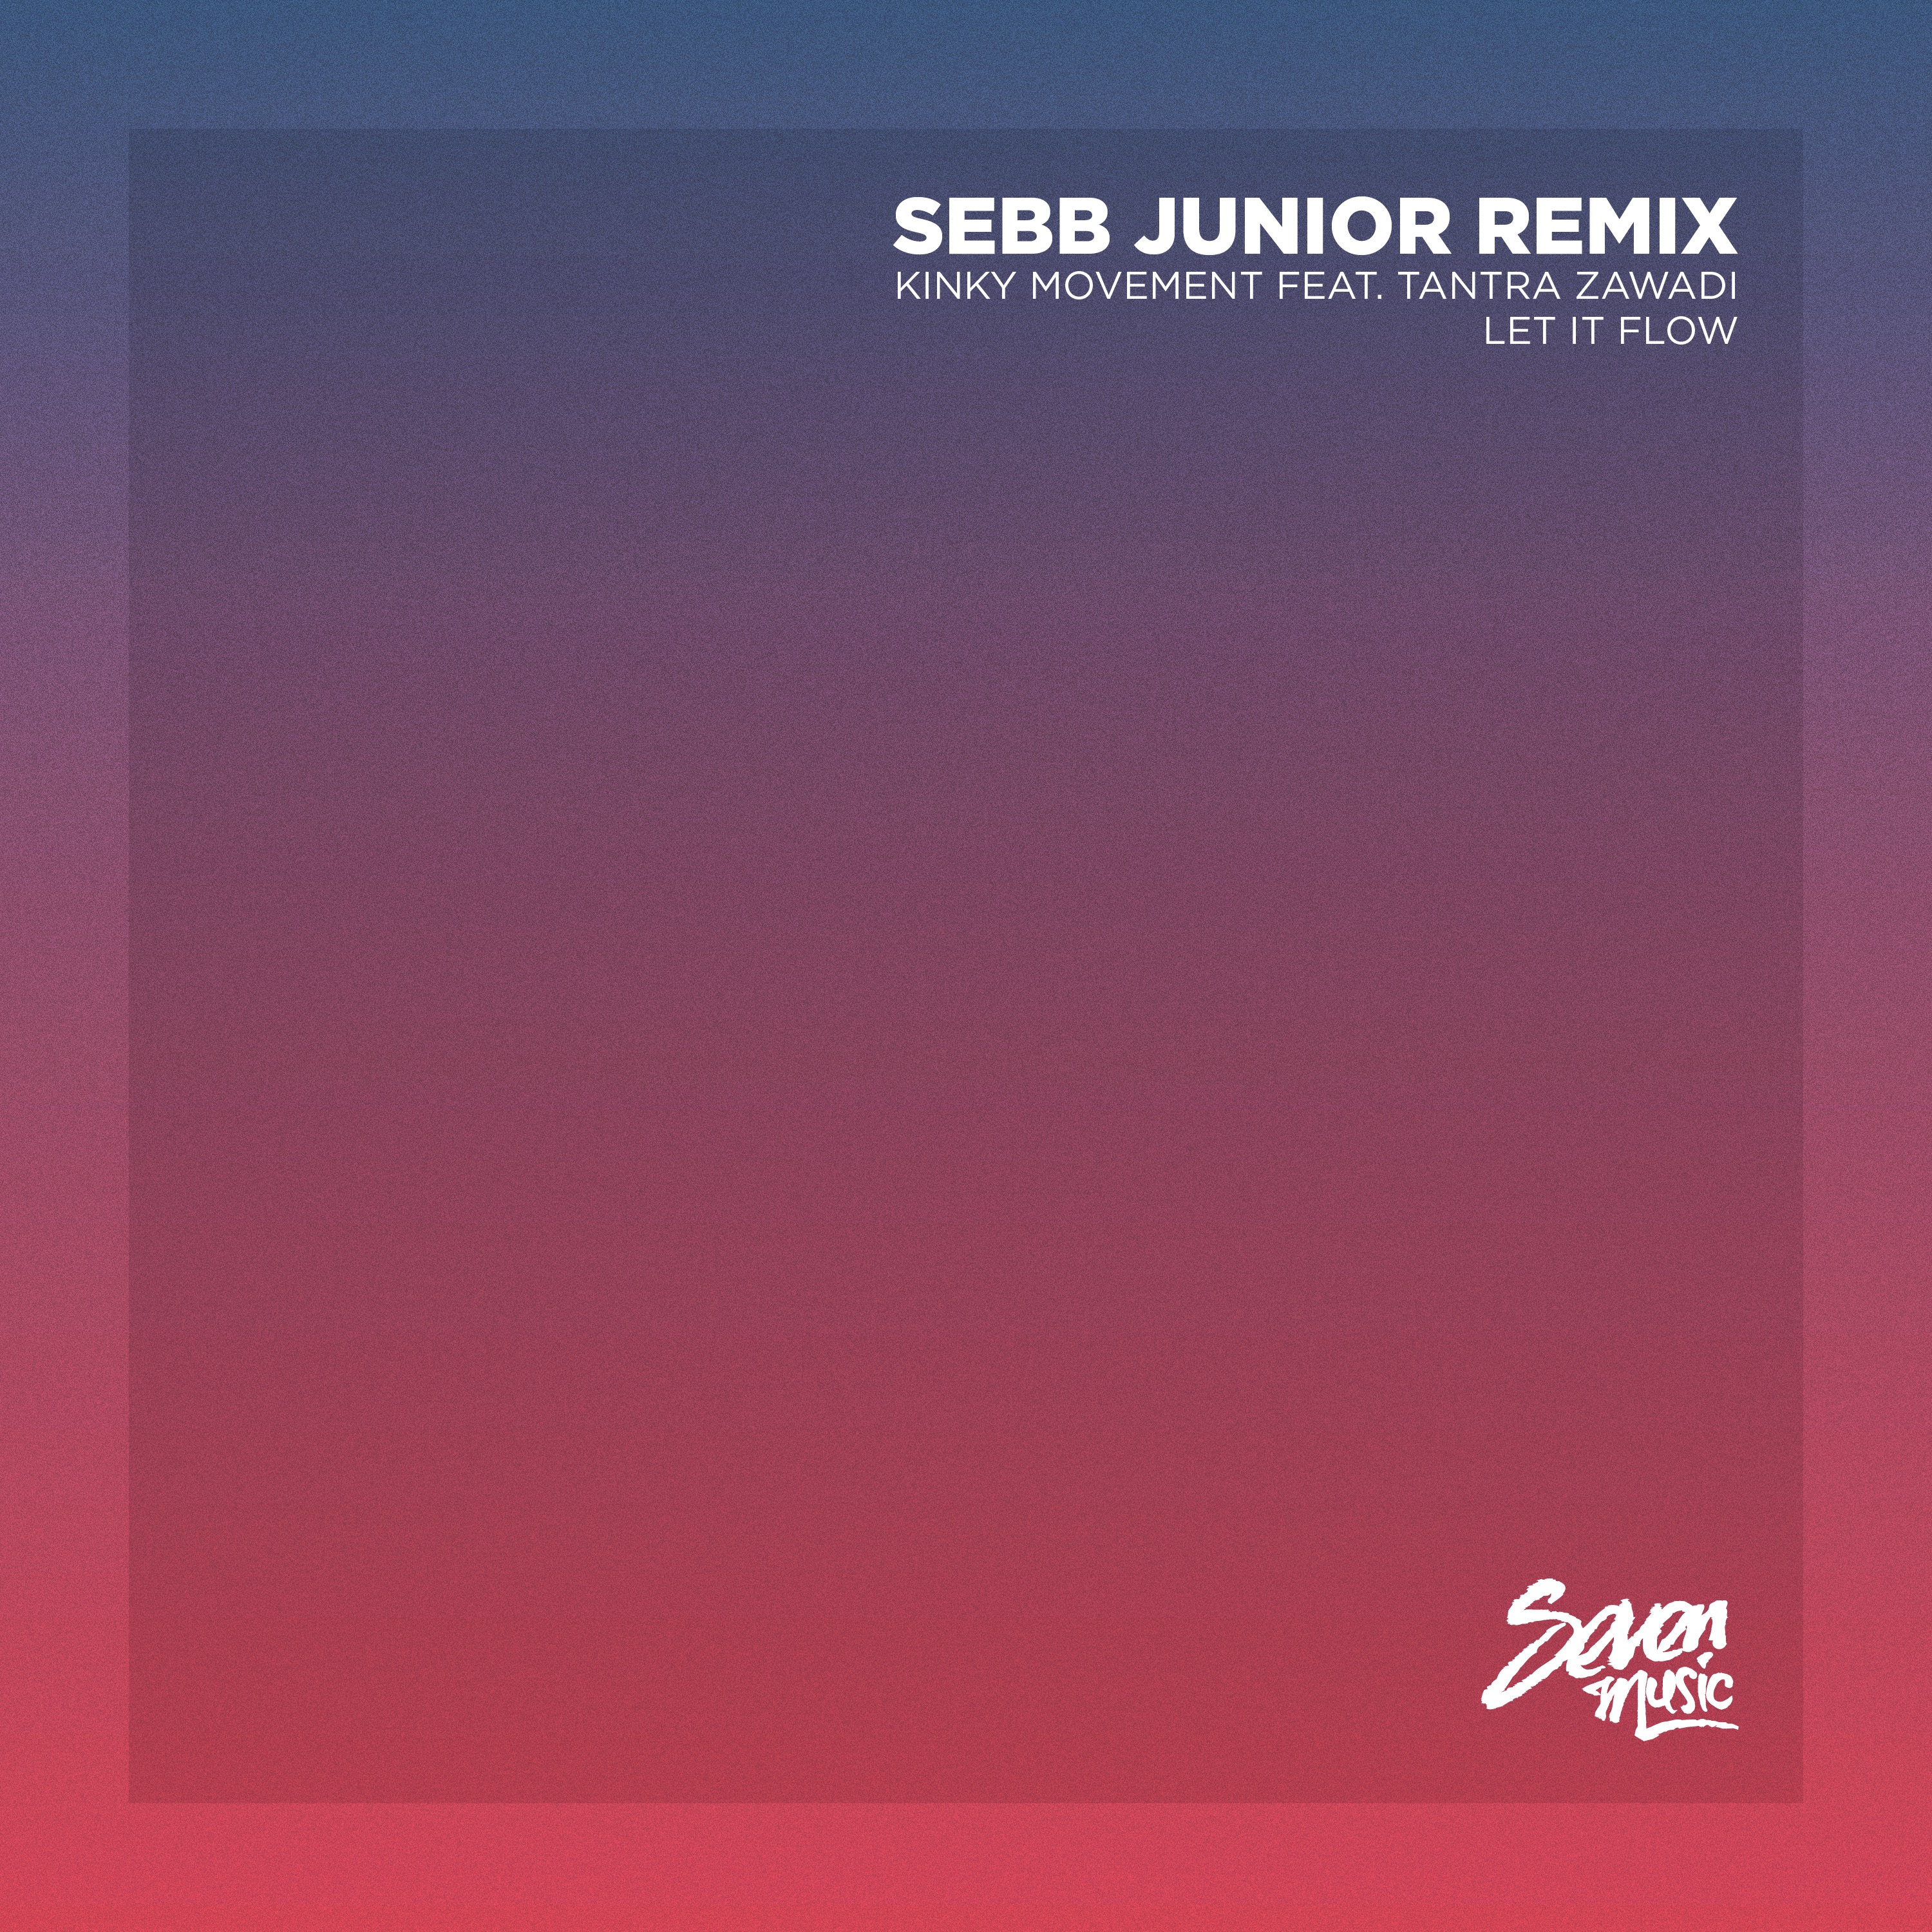 ڈاؤن لوڈ کریں Premiere: Kinky Movement - Let It Flow (Sebb Junior Remix) - Seven Music